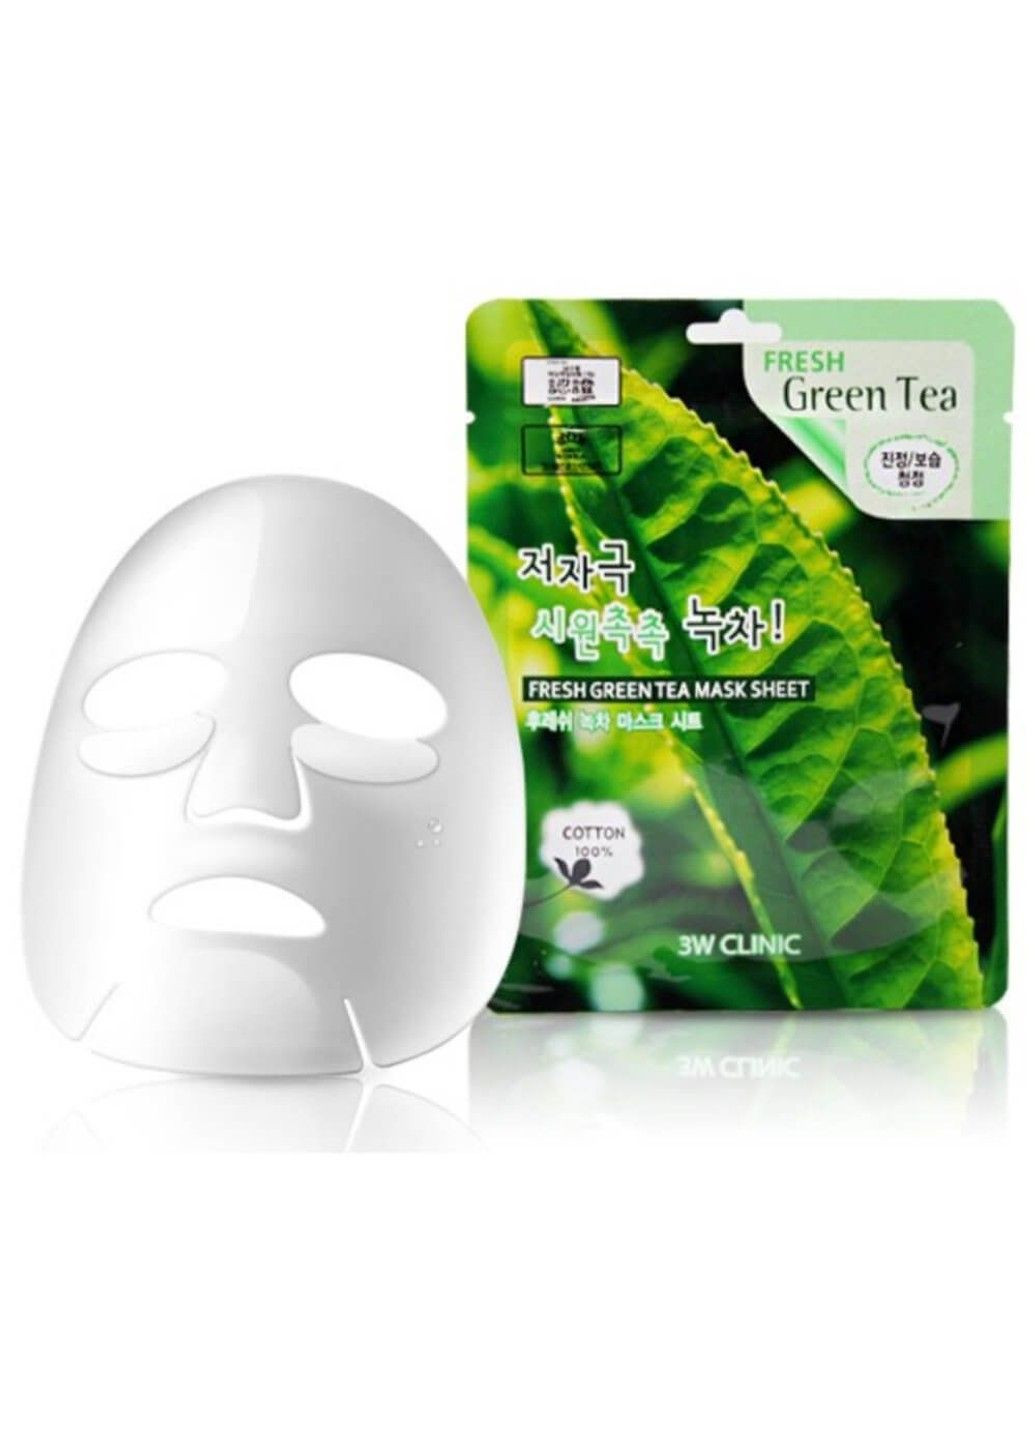 Маска для лица тканевая успокаивающая Зеленый Чай Fresh Green Tea Mask Sheet, 23 мл 3W Clinic (285813592)